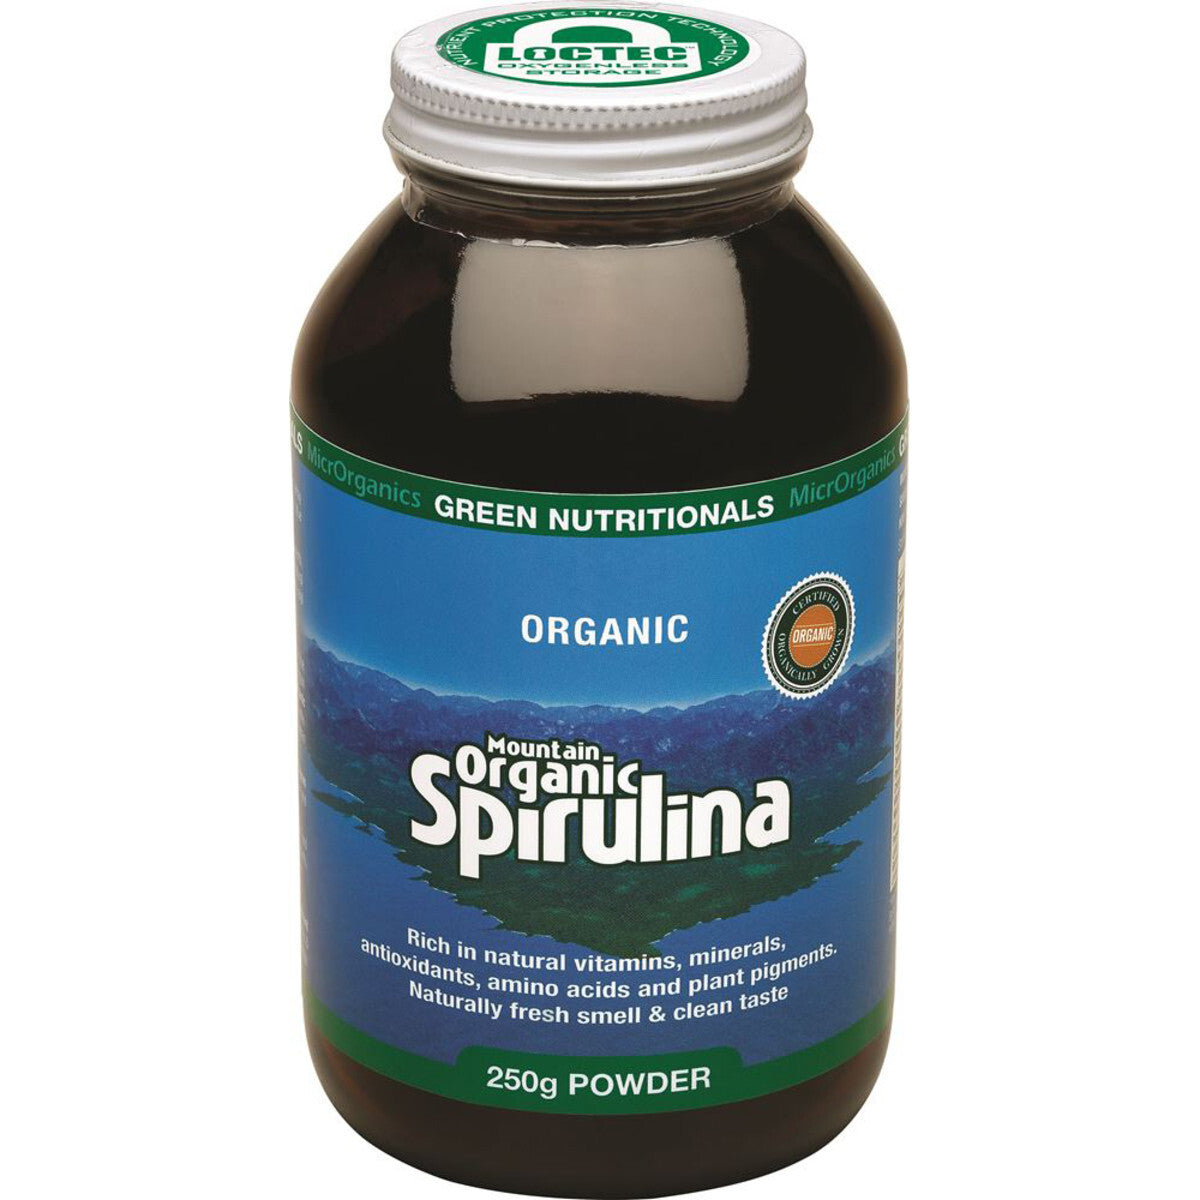 Green Nutritionals Organic Mountain Spirulina 250g